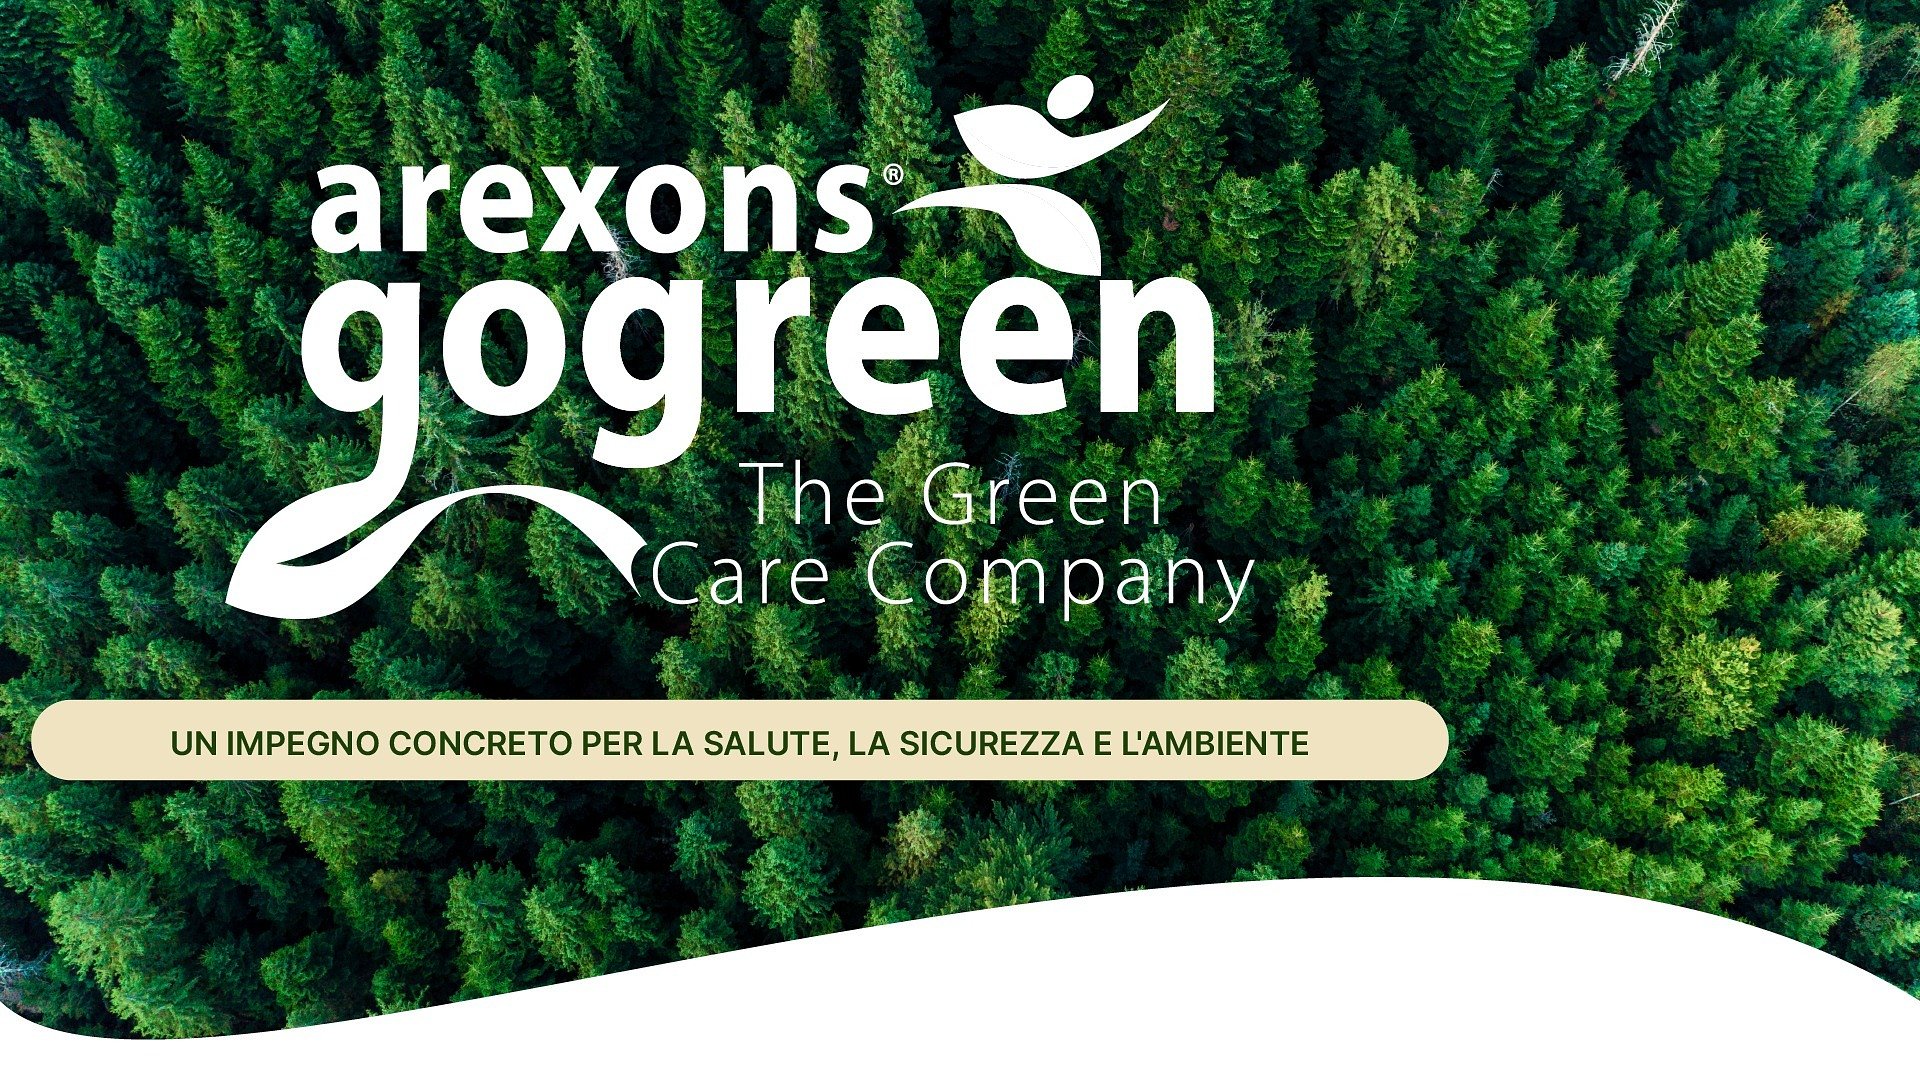 arexons go green